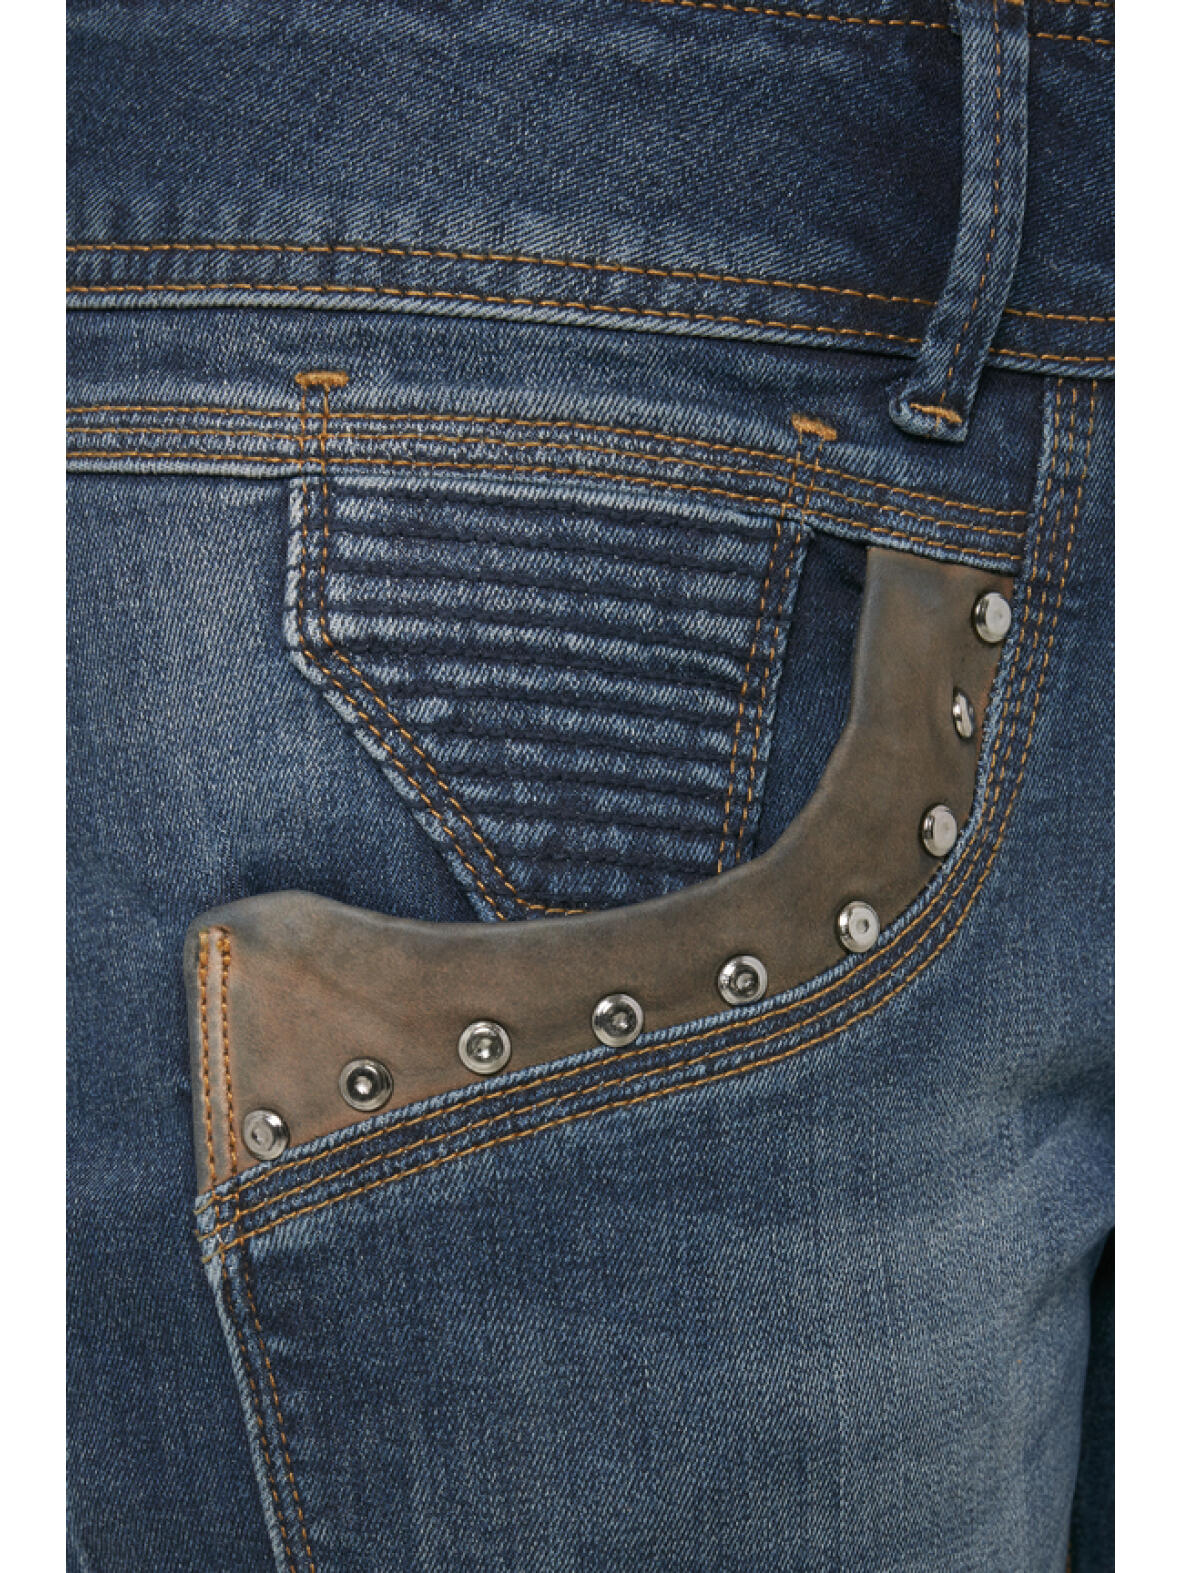 beslutte adgang tyk Boutique Dorthe - Pulz Stasia curved jeans